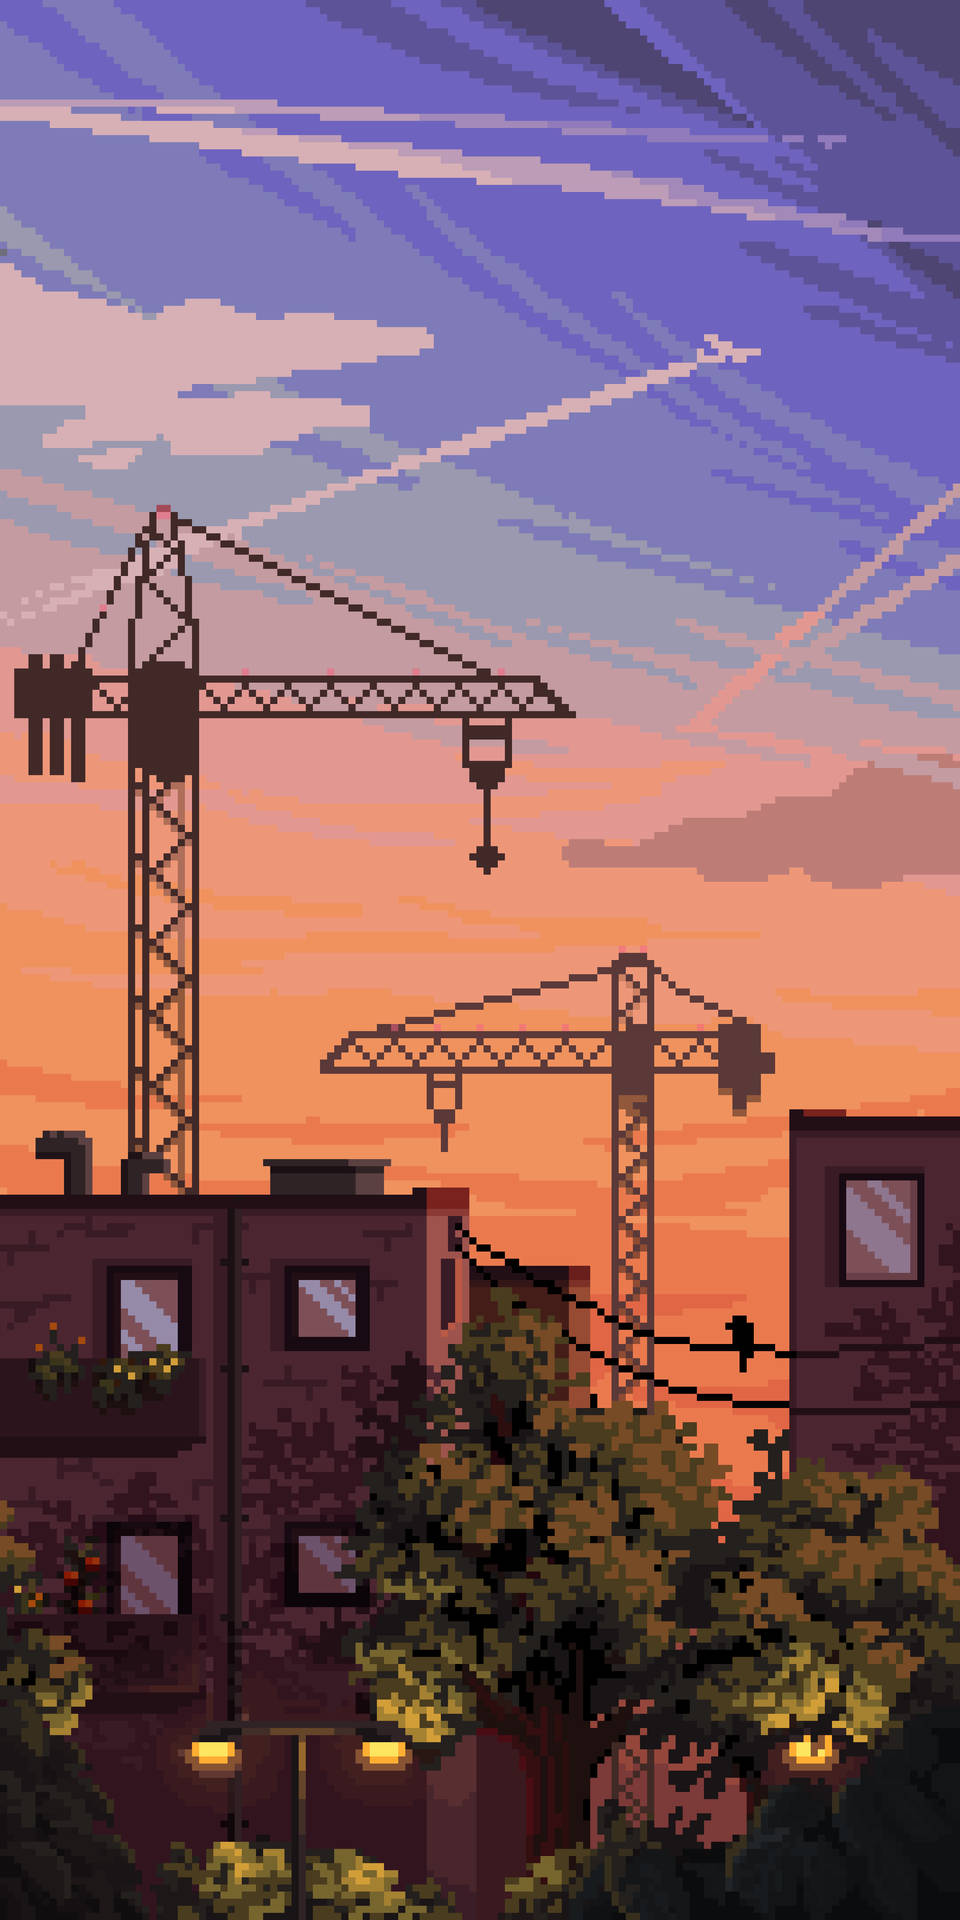 Buildings And Tower Cranes In Aesthetic Pixel Art Wallpaper